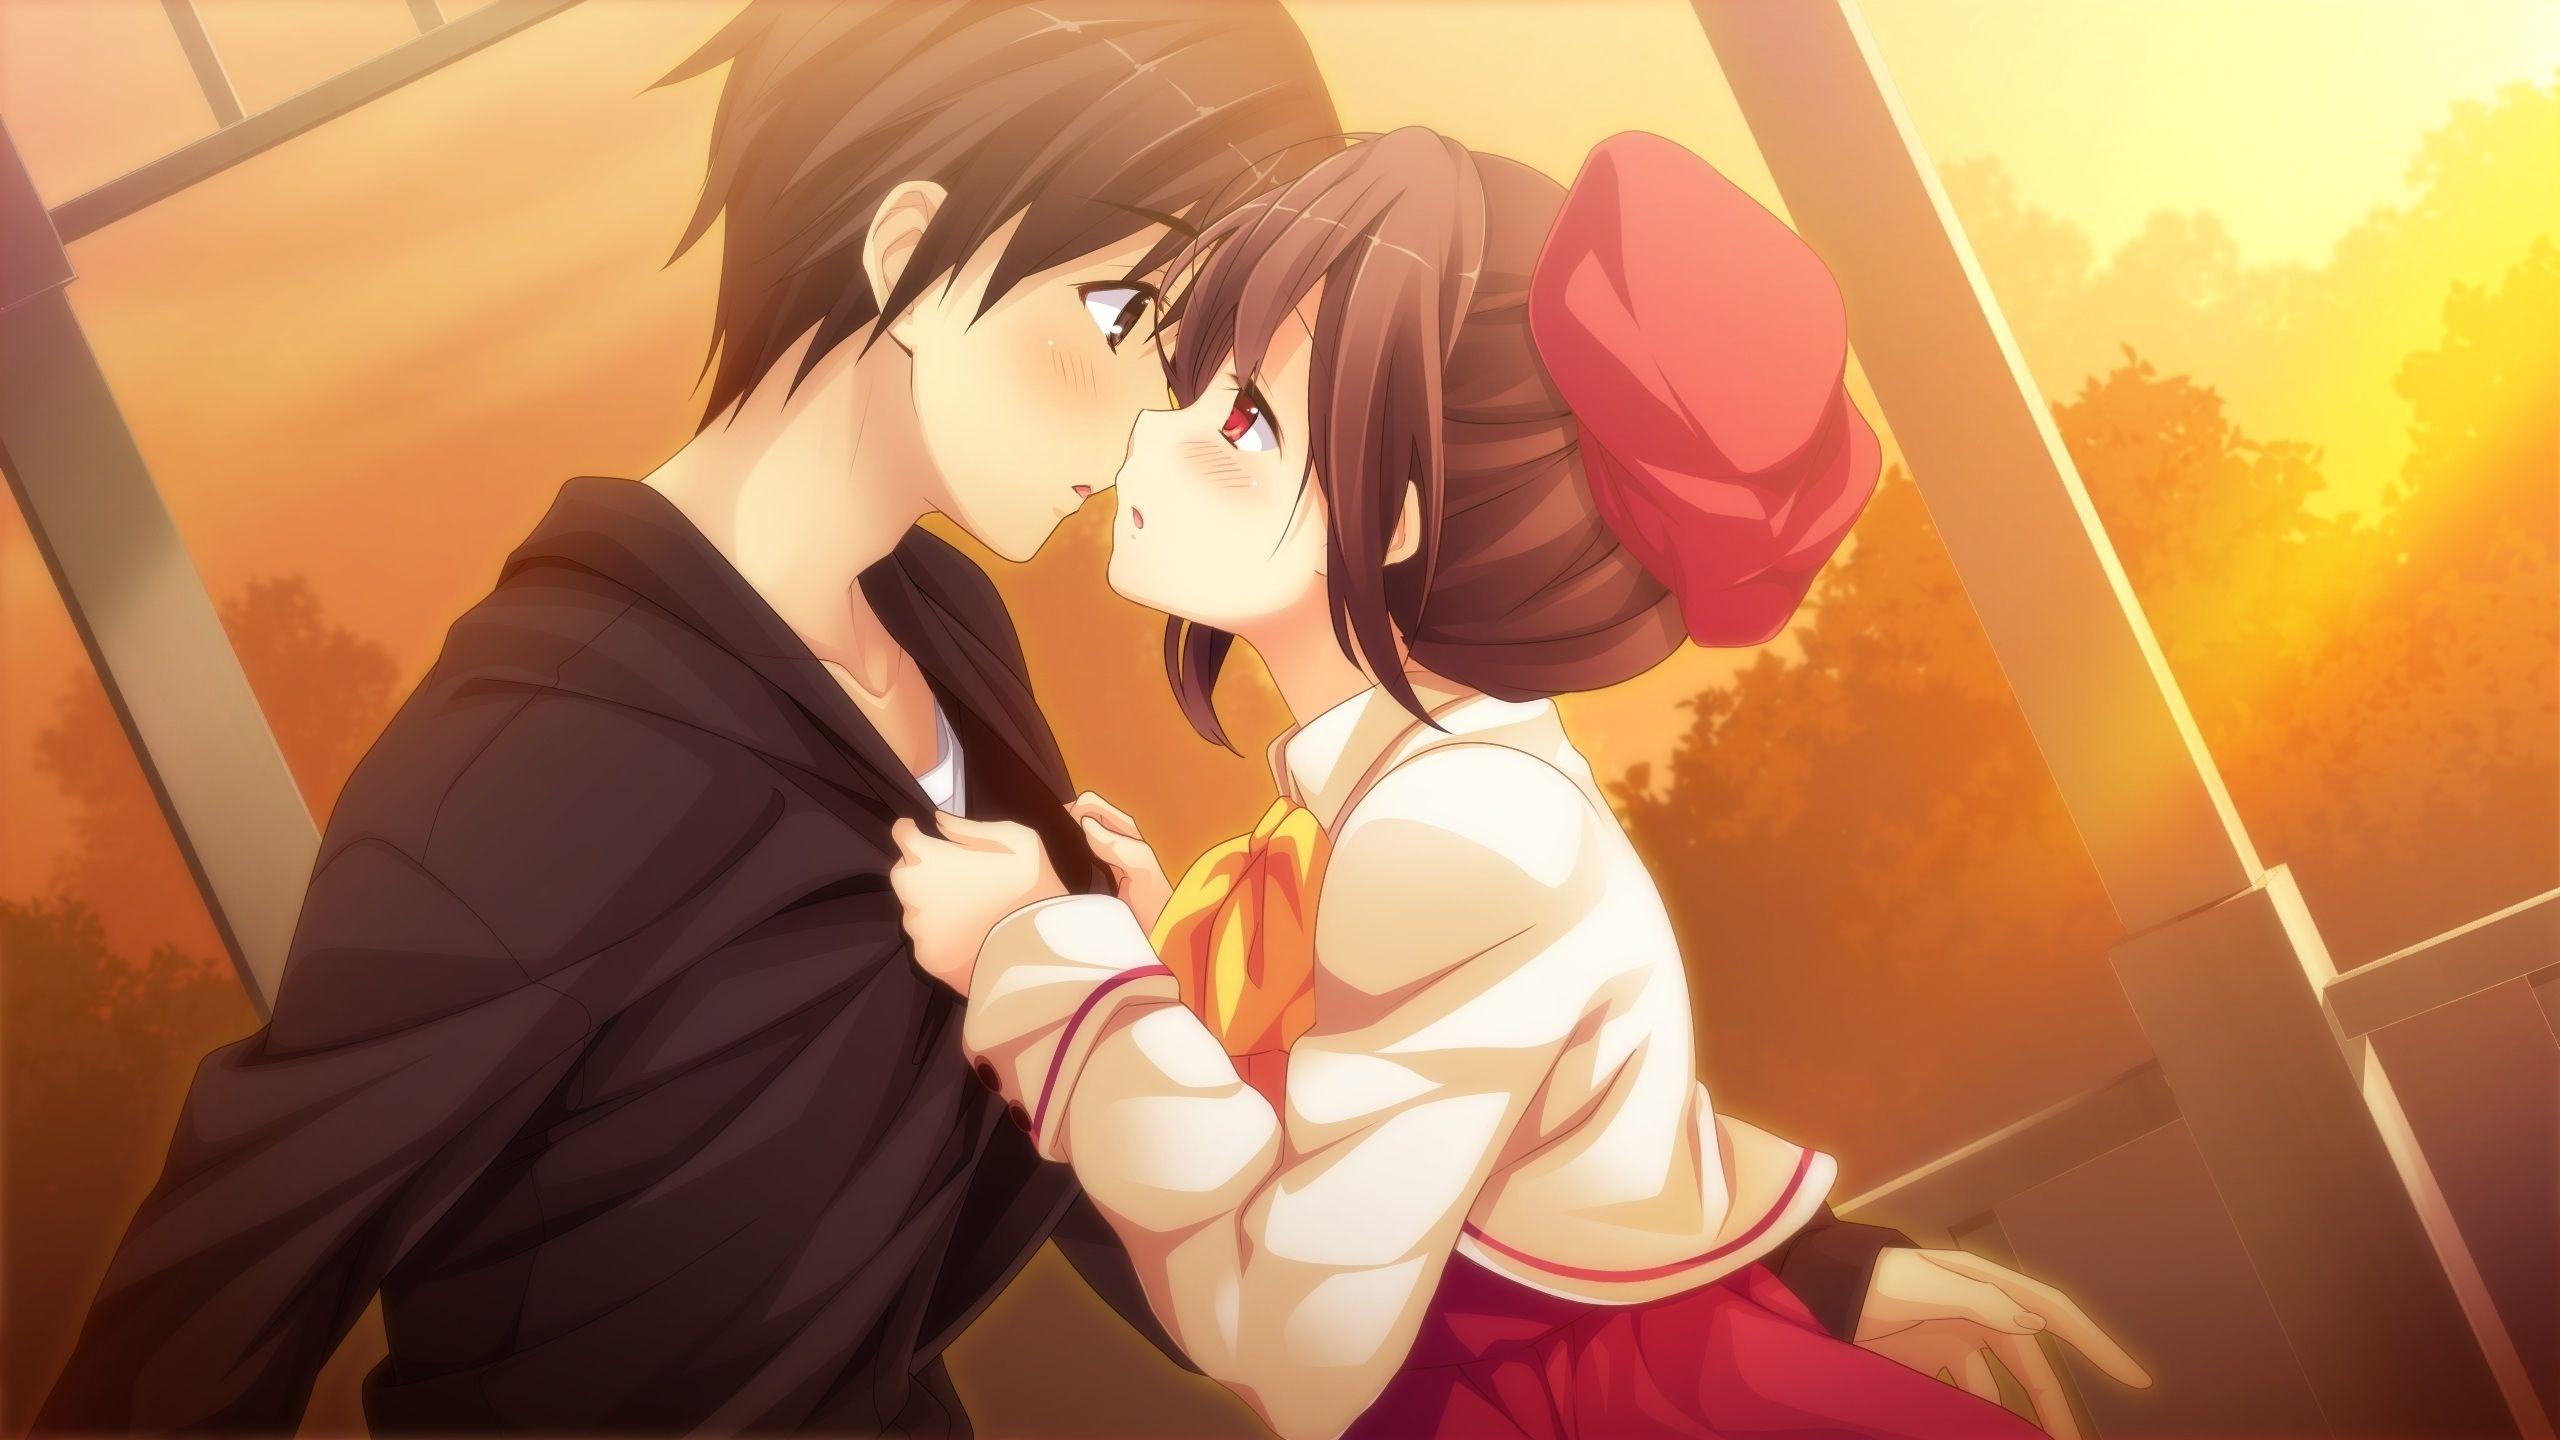 Download 2560x1440 Anime Couple, Romance, Sunset Wallpaper for iMac